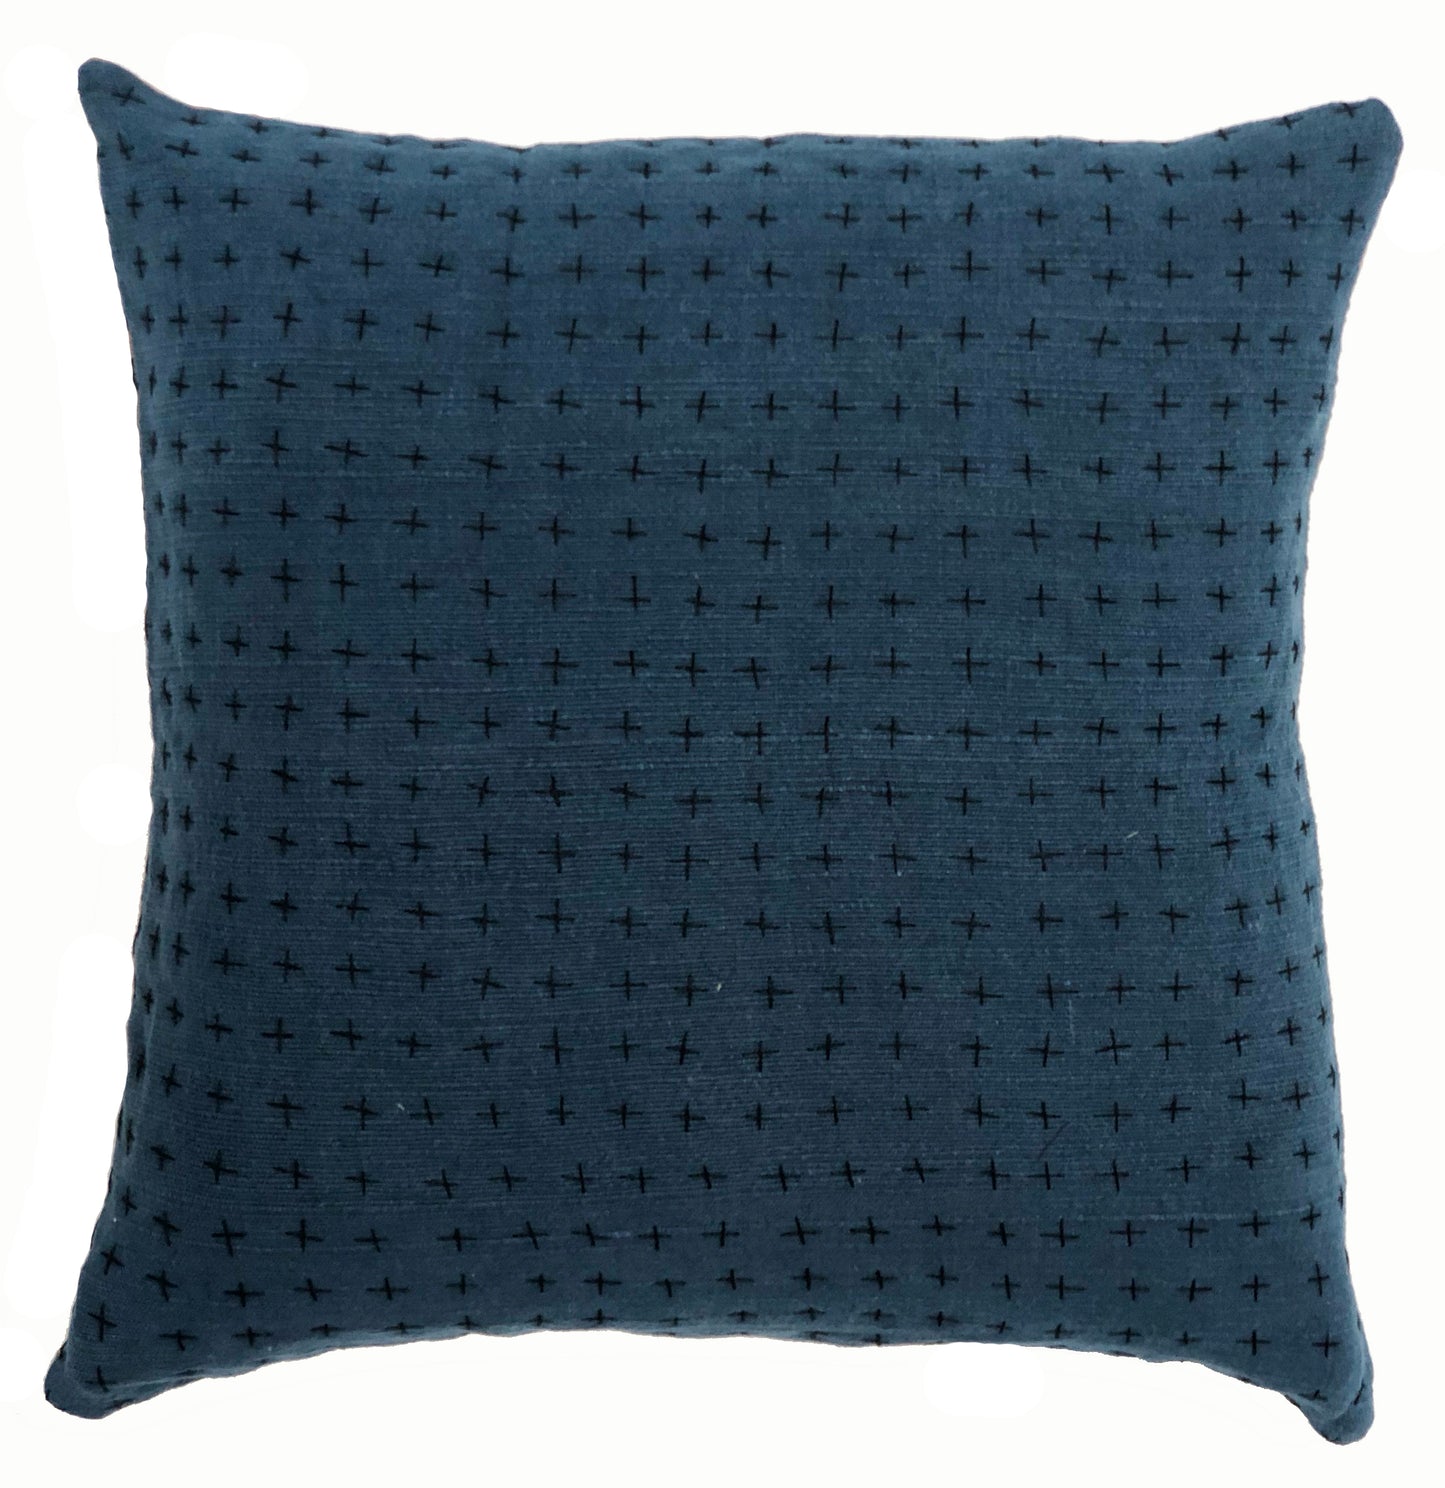 Indigo & Lavender Pillow Cover 18x18in